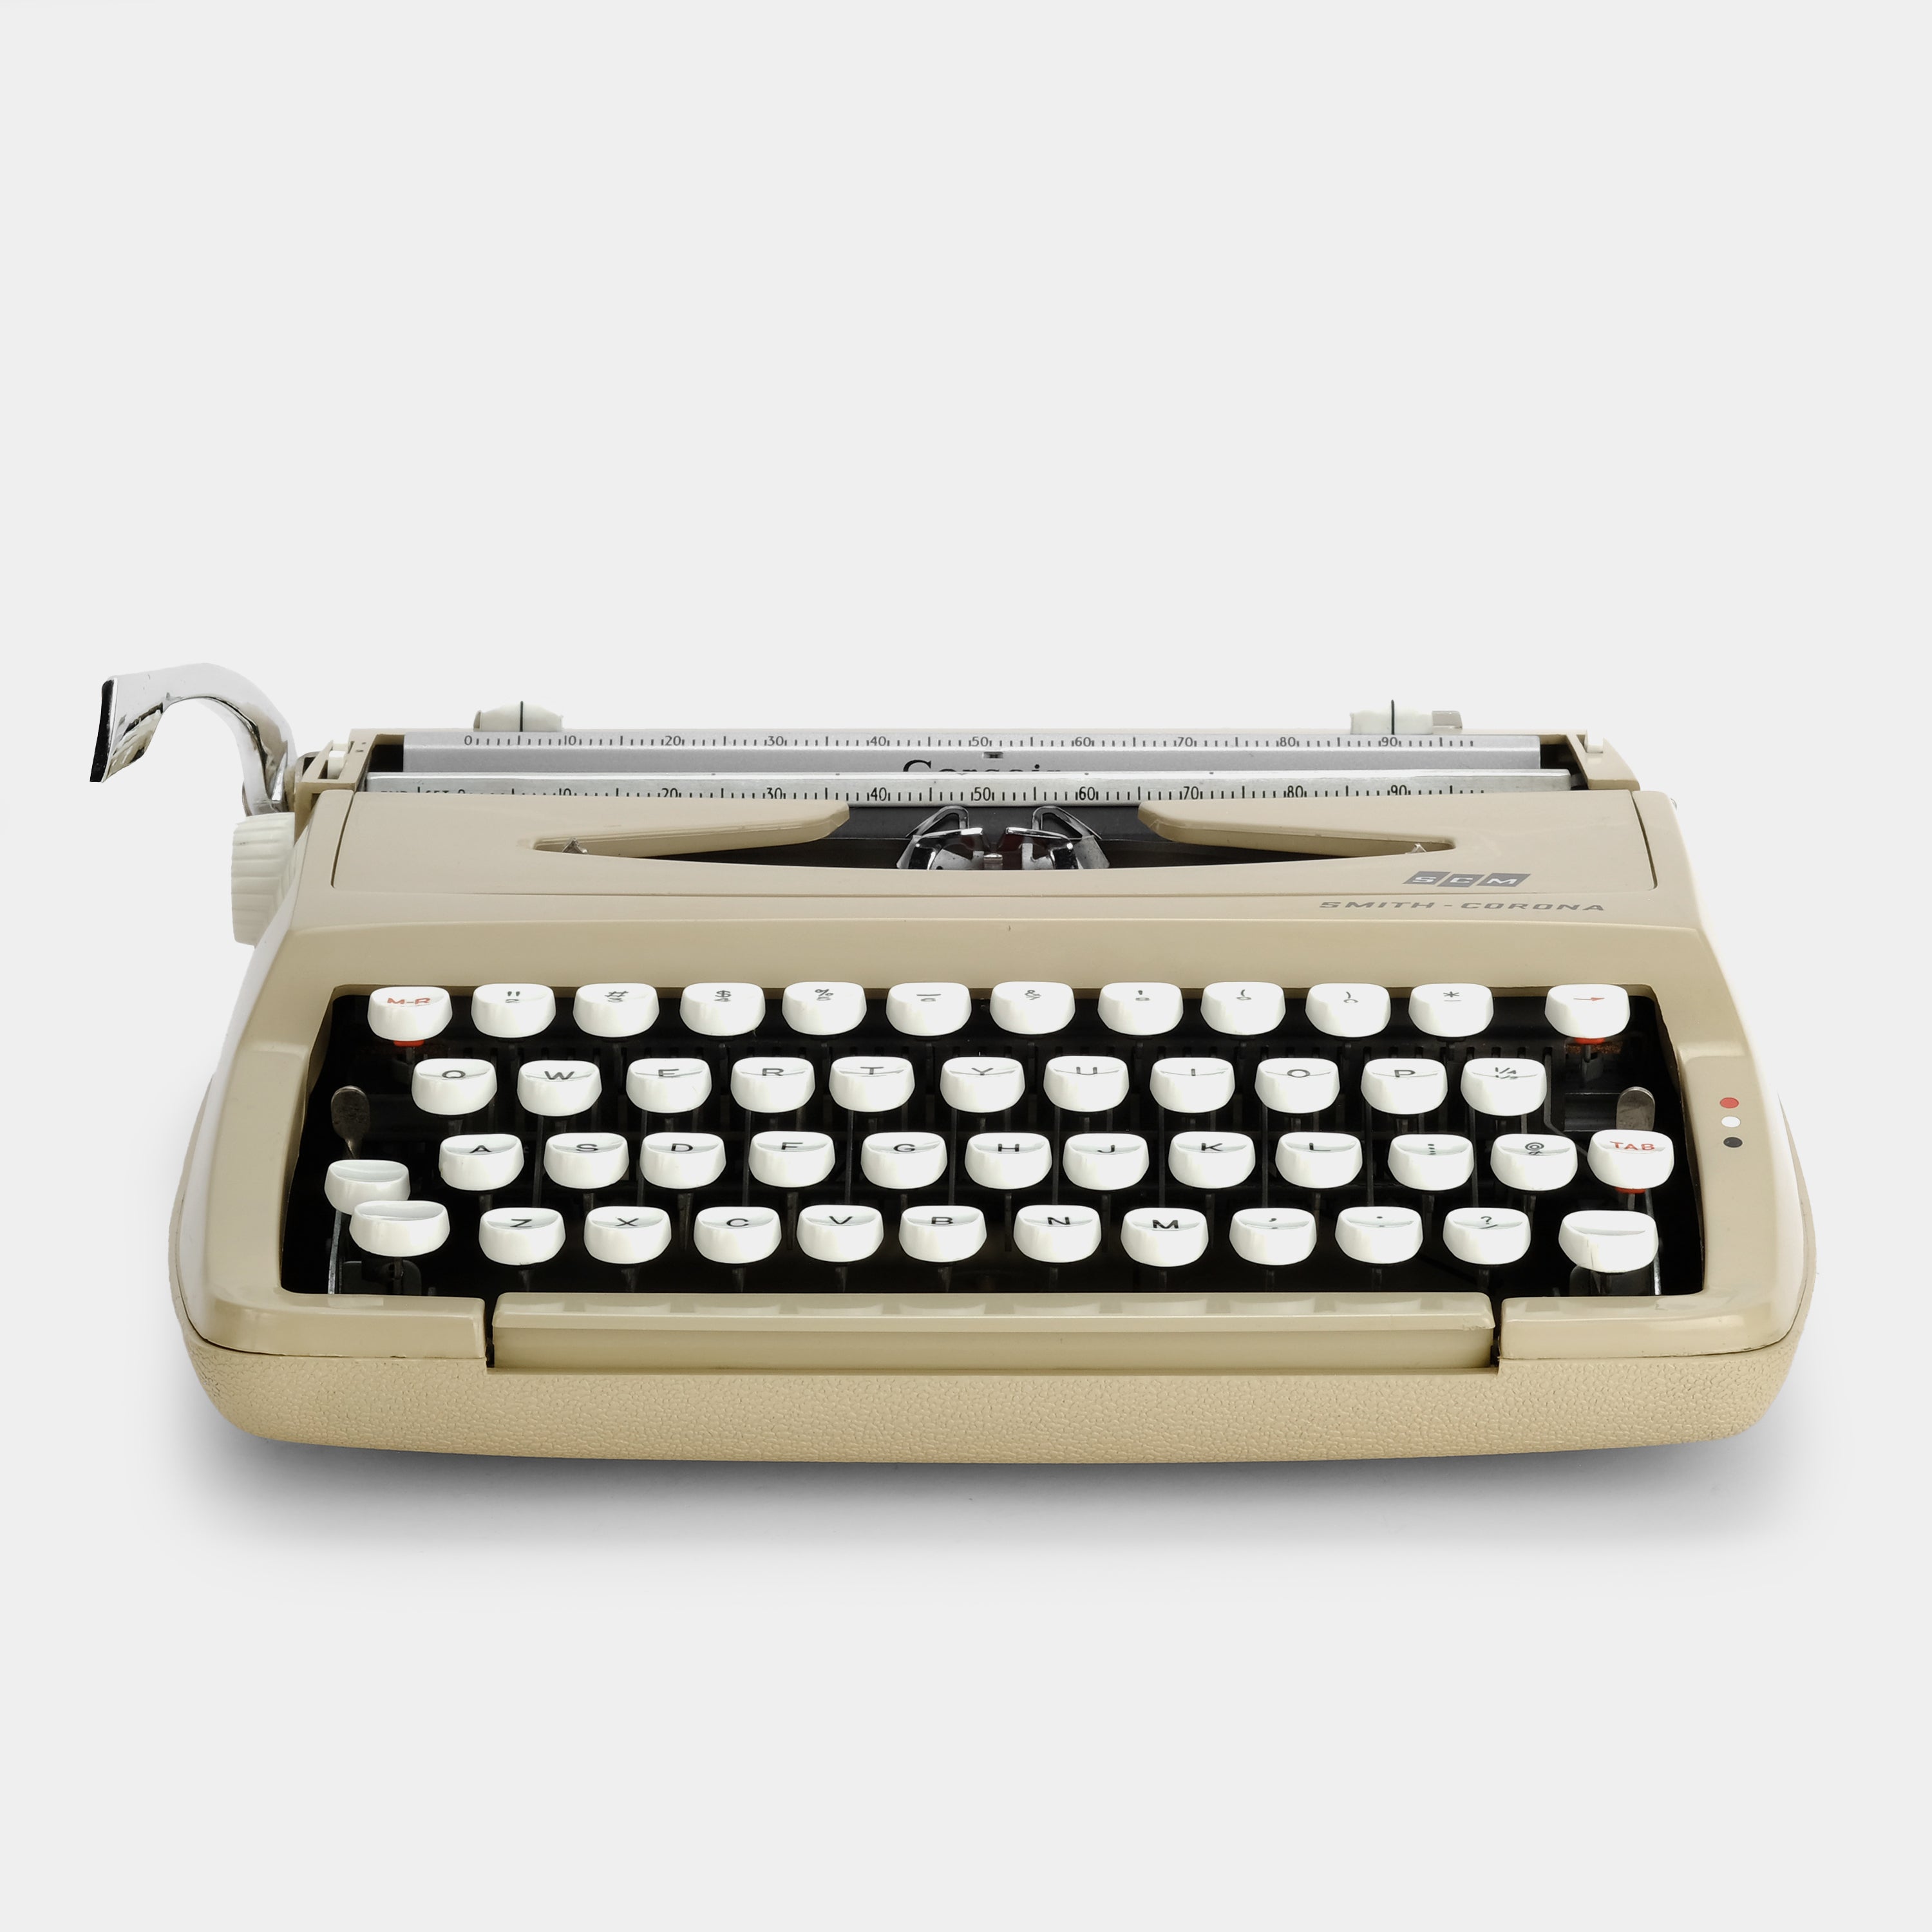 Smith-Corona Corsair Tan Manual Typewriter and Case